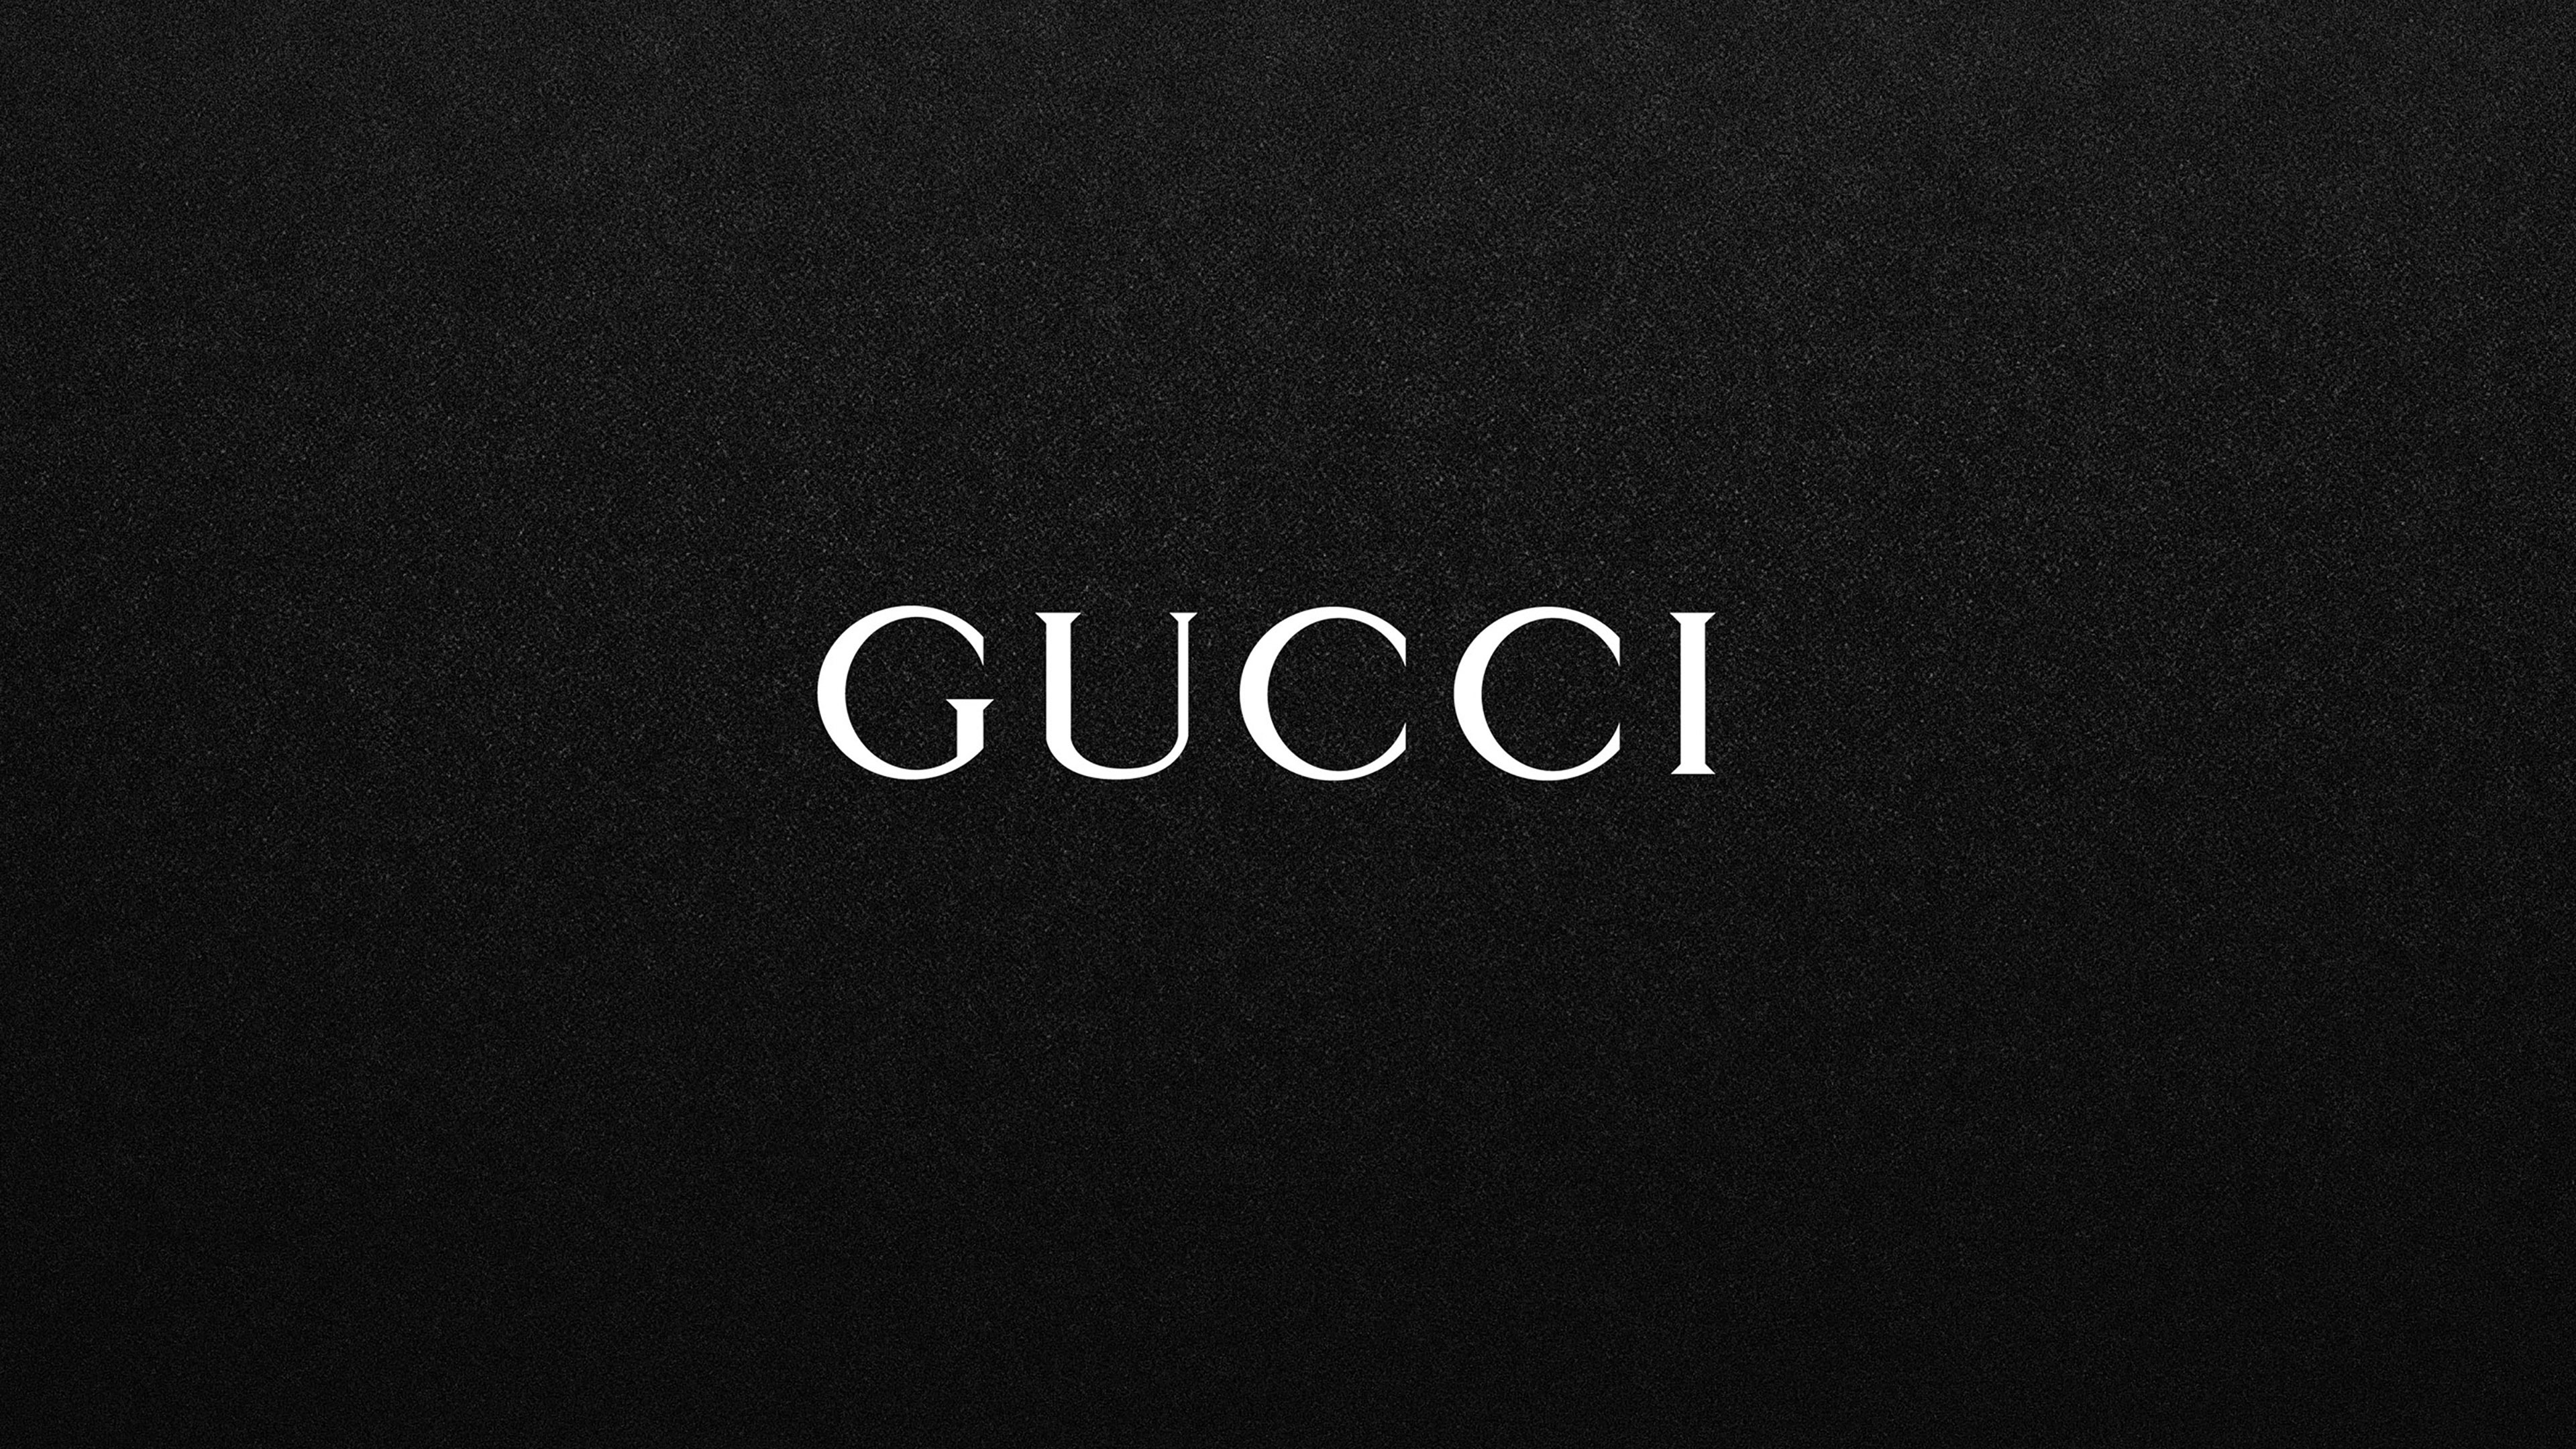 35 Gambar Wallpaper Hd Iphone Gucci terbaru 2020